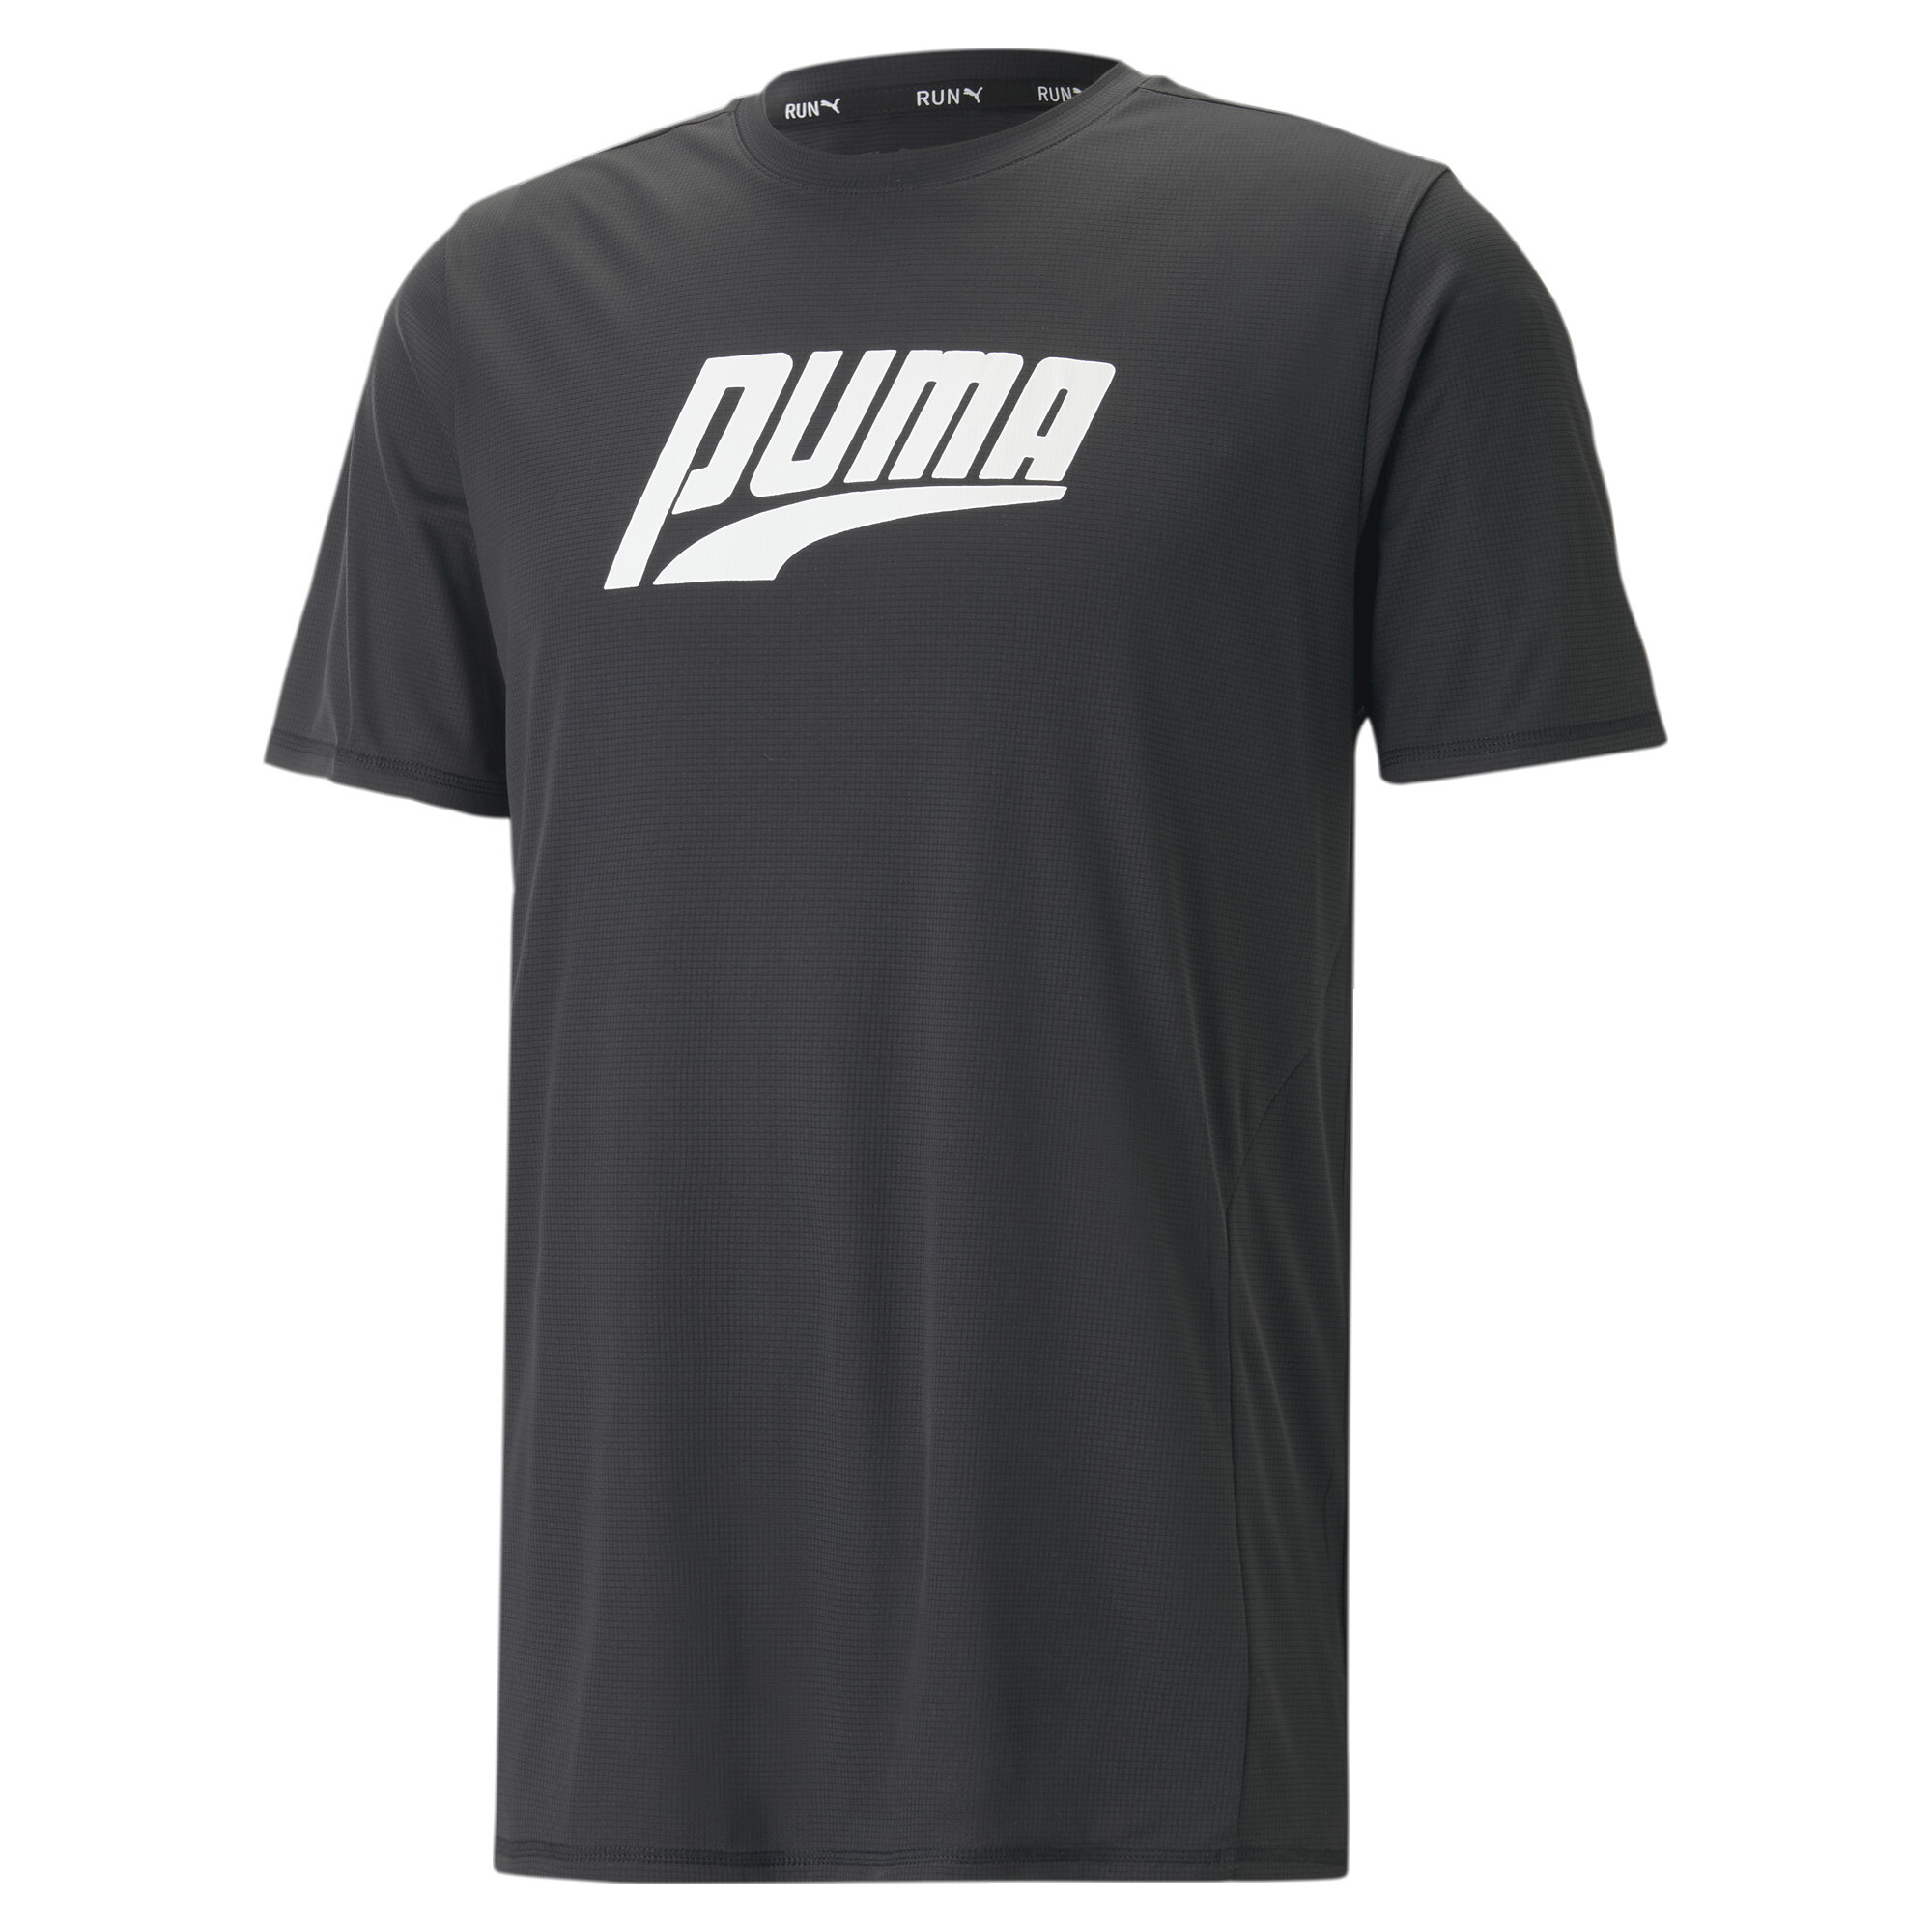 Men's PUMA RUN FAVOURITE Short Sleeve Graphic Running T-Shirt Men In Black, Size XL